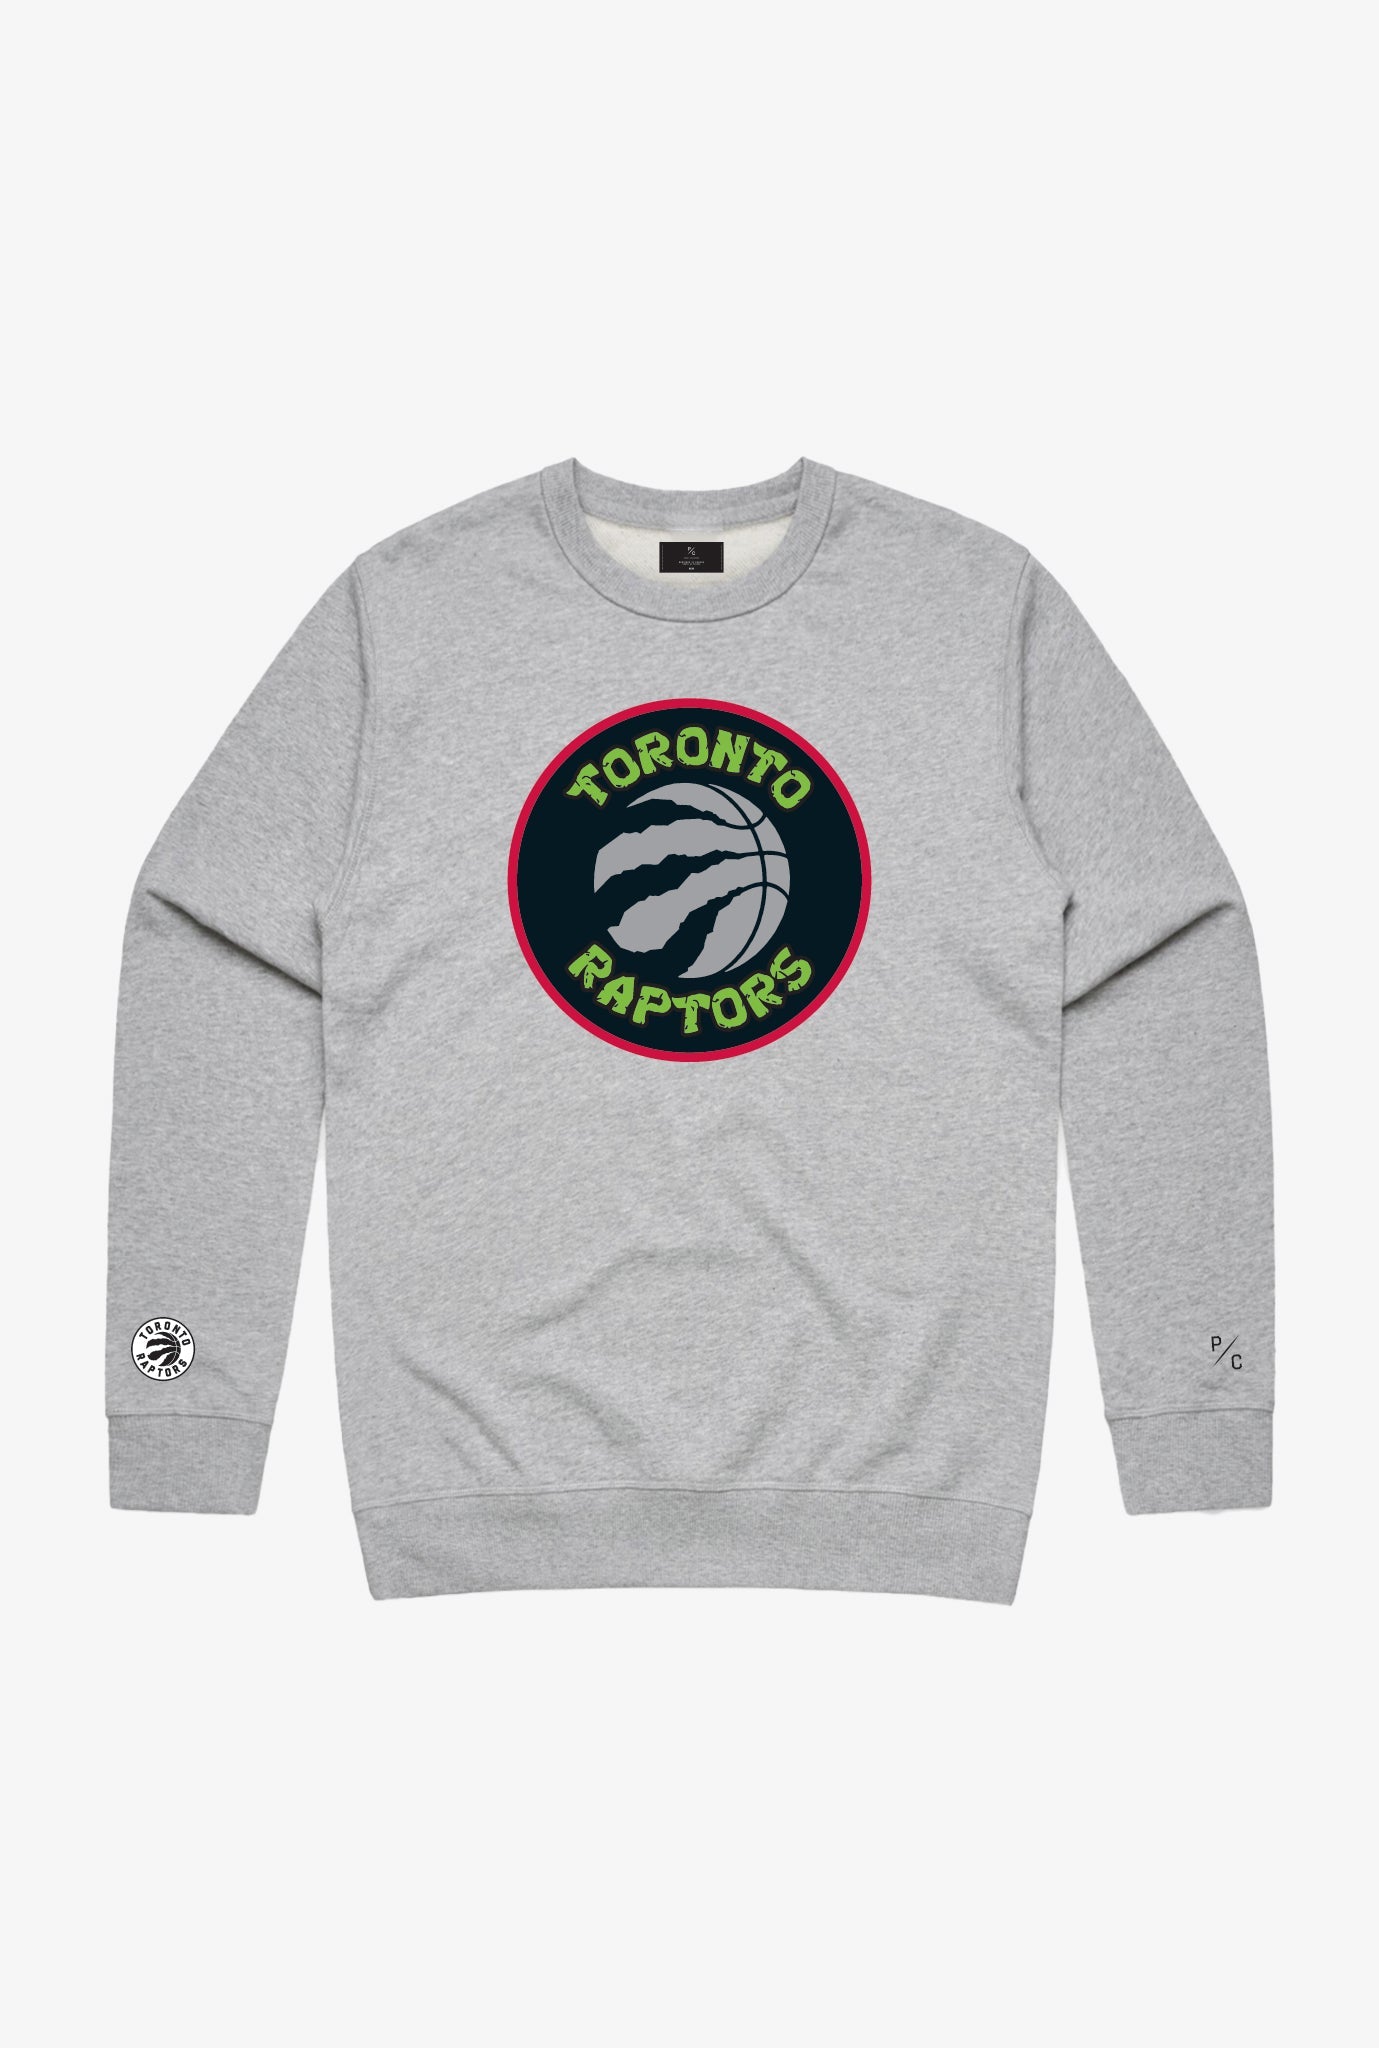 P/C x TMNT Toronto Raptors Logo Crewneck - Grey